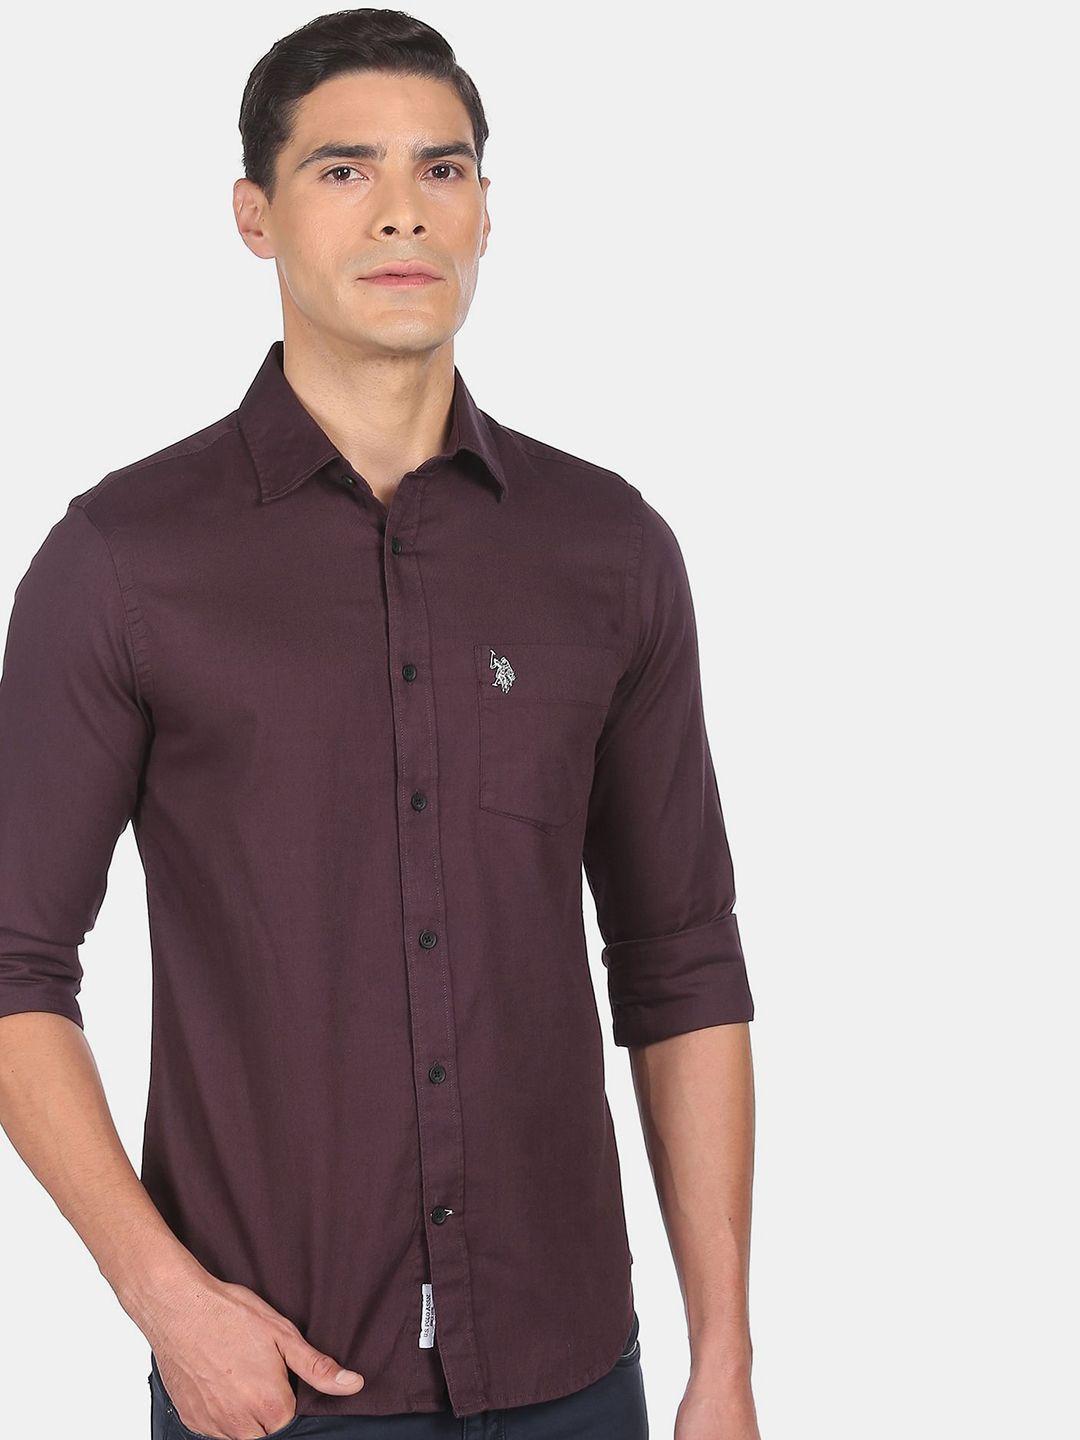 U S Polo Assn Men Purple Premium Cotton Solid Casual Shirt